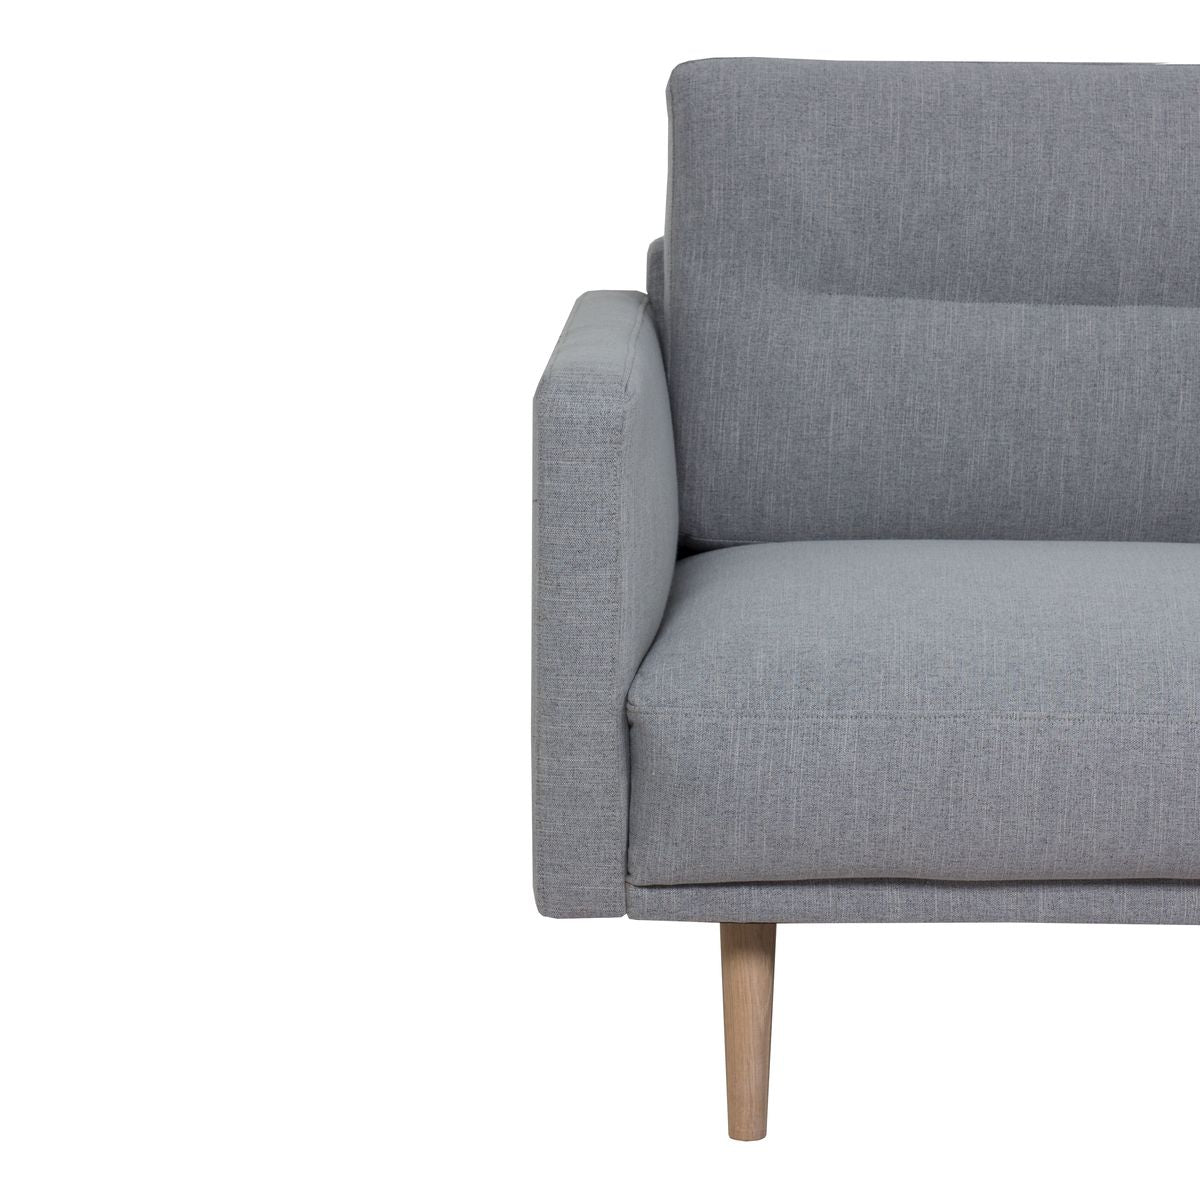 Larvik 3 Seater Sofa - Grey, Oak Legs